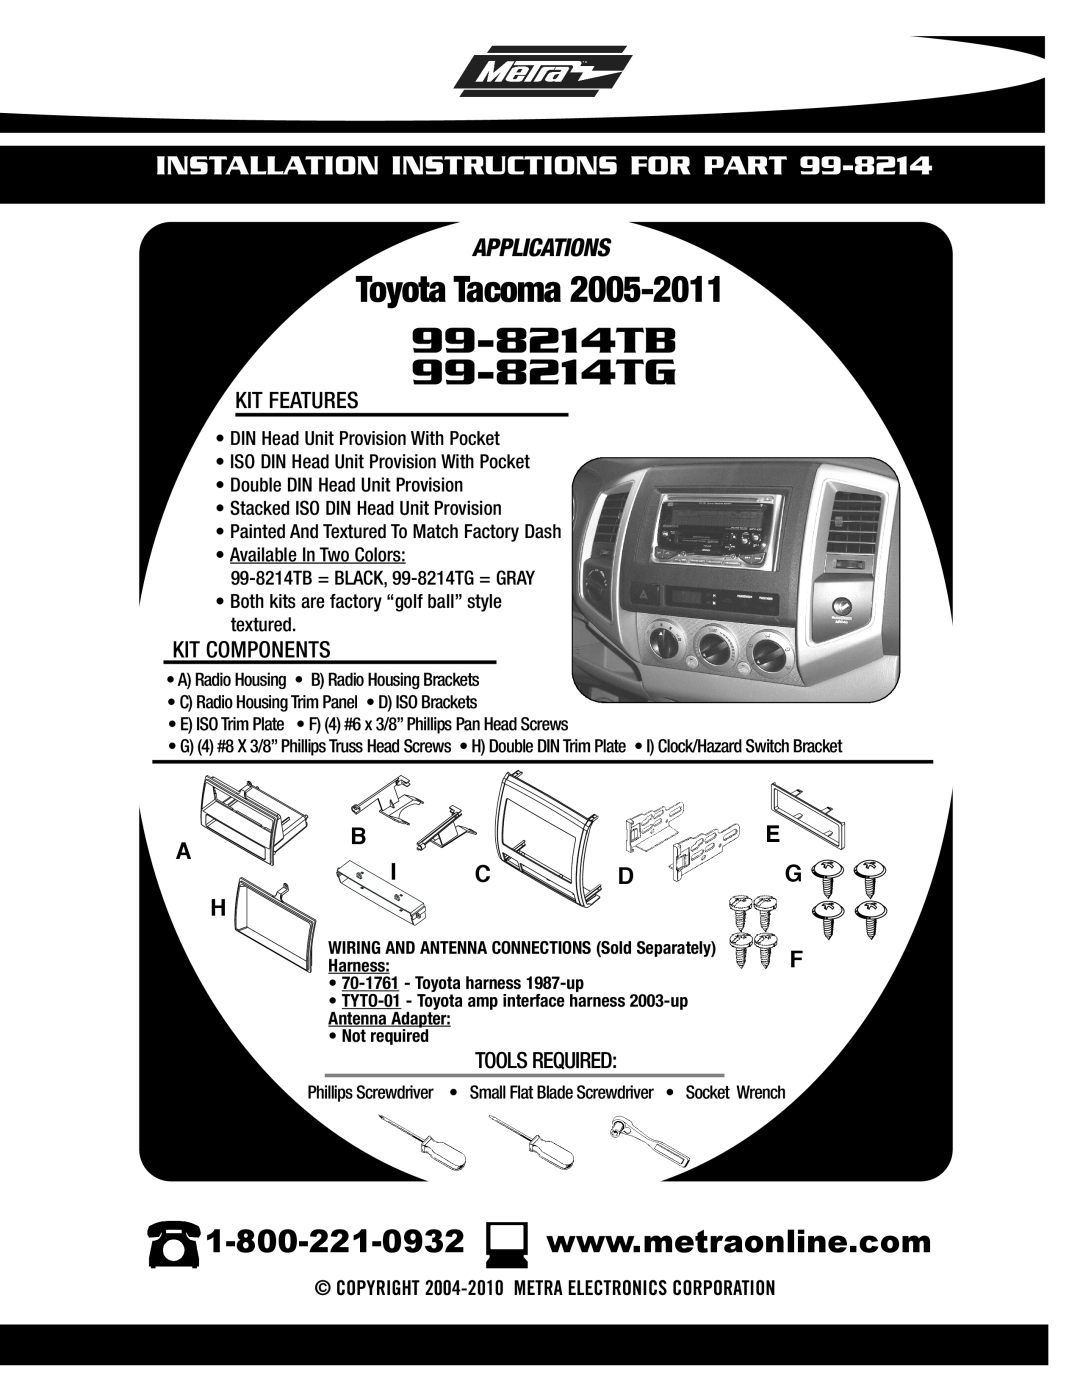 Metra Electronics installation instructions Applications, 99-8214TB 99-8214TG, Toyota Tacoma, Kit Features, B A I C D H 